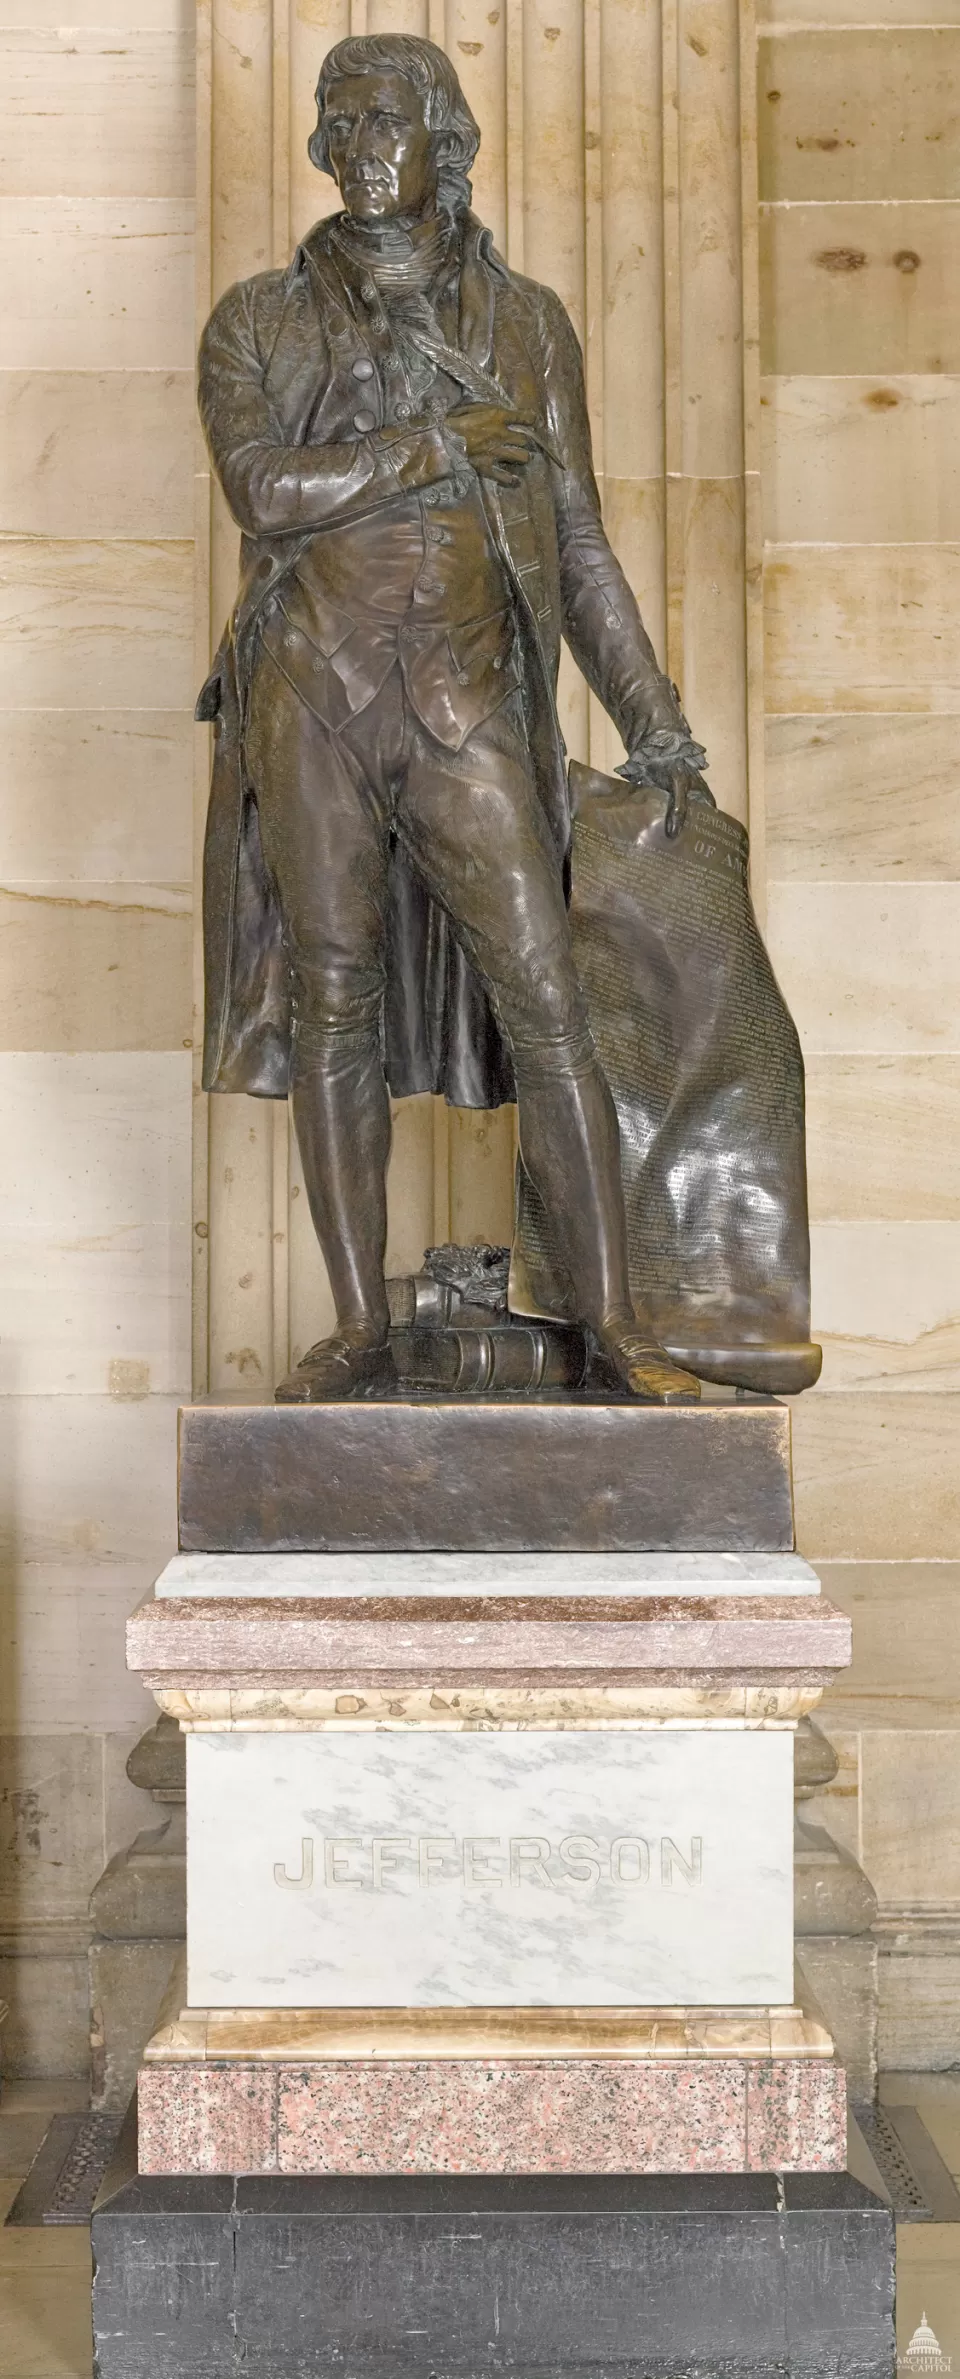 Statue of Thomas Jefferson in the U.S. Capitol Rotunda.